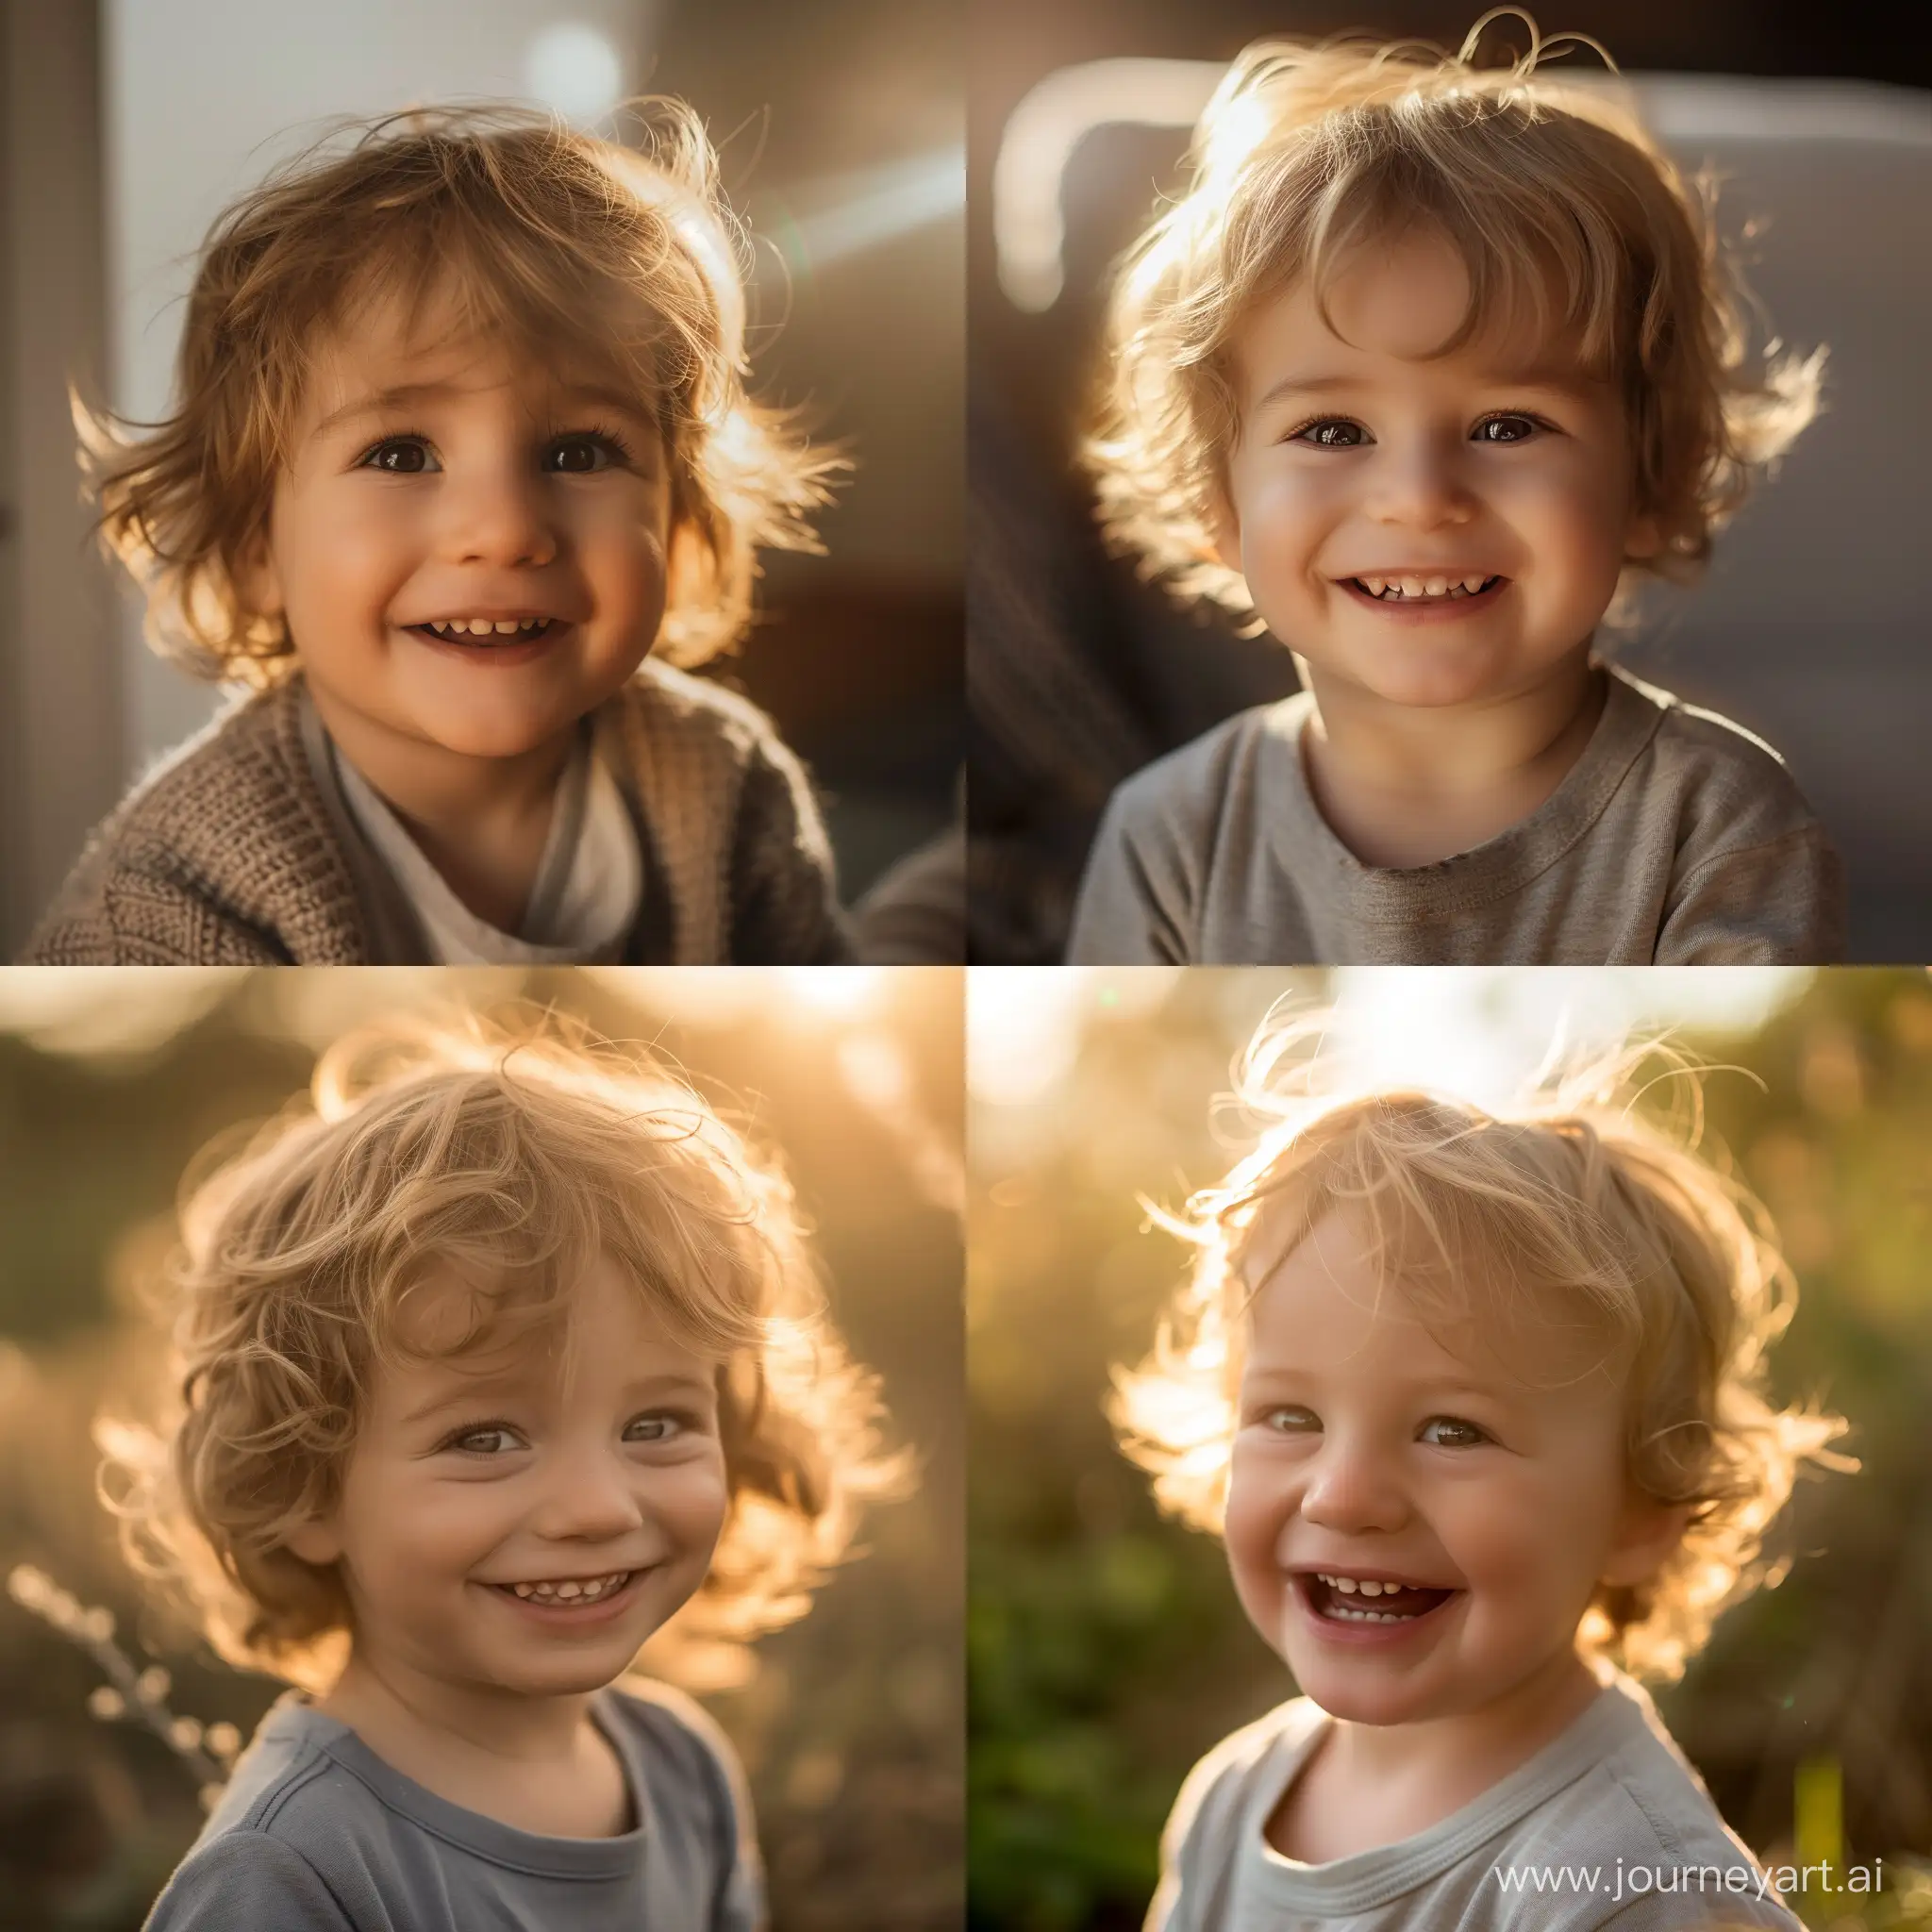 Smiling-Toddler-Boy-Portrait-in-Morning-Light